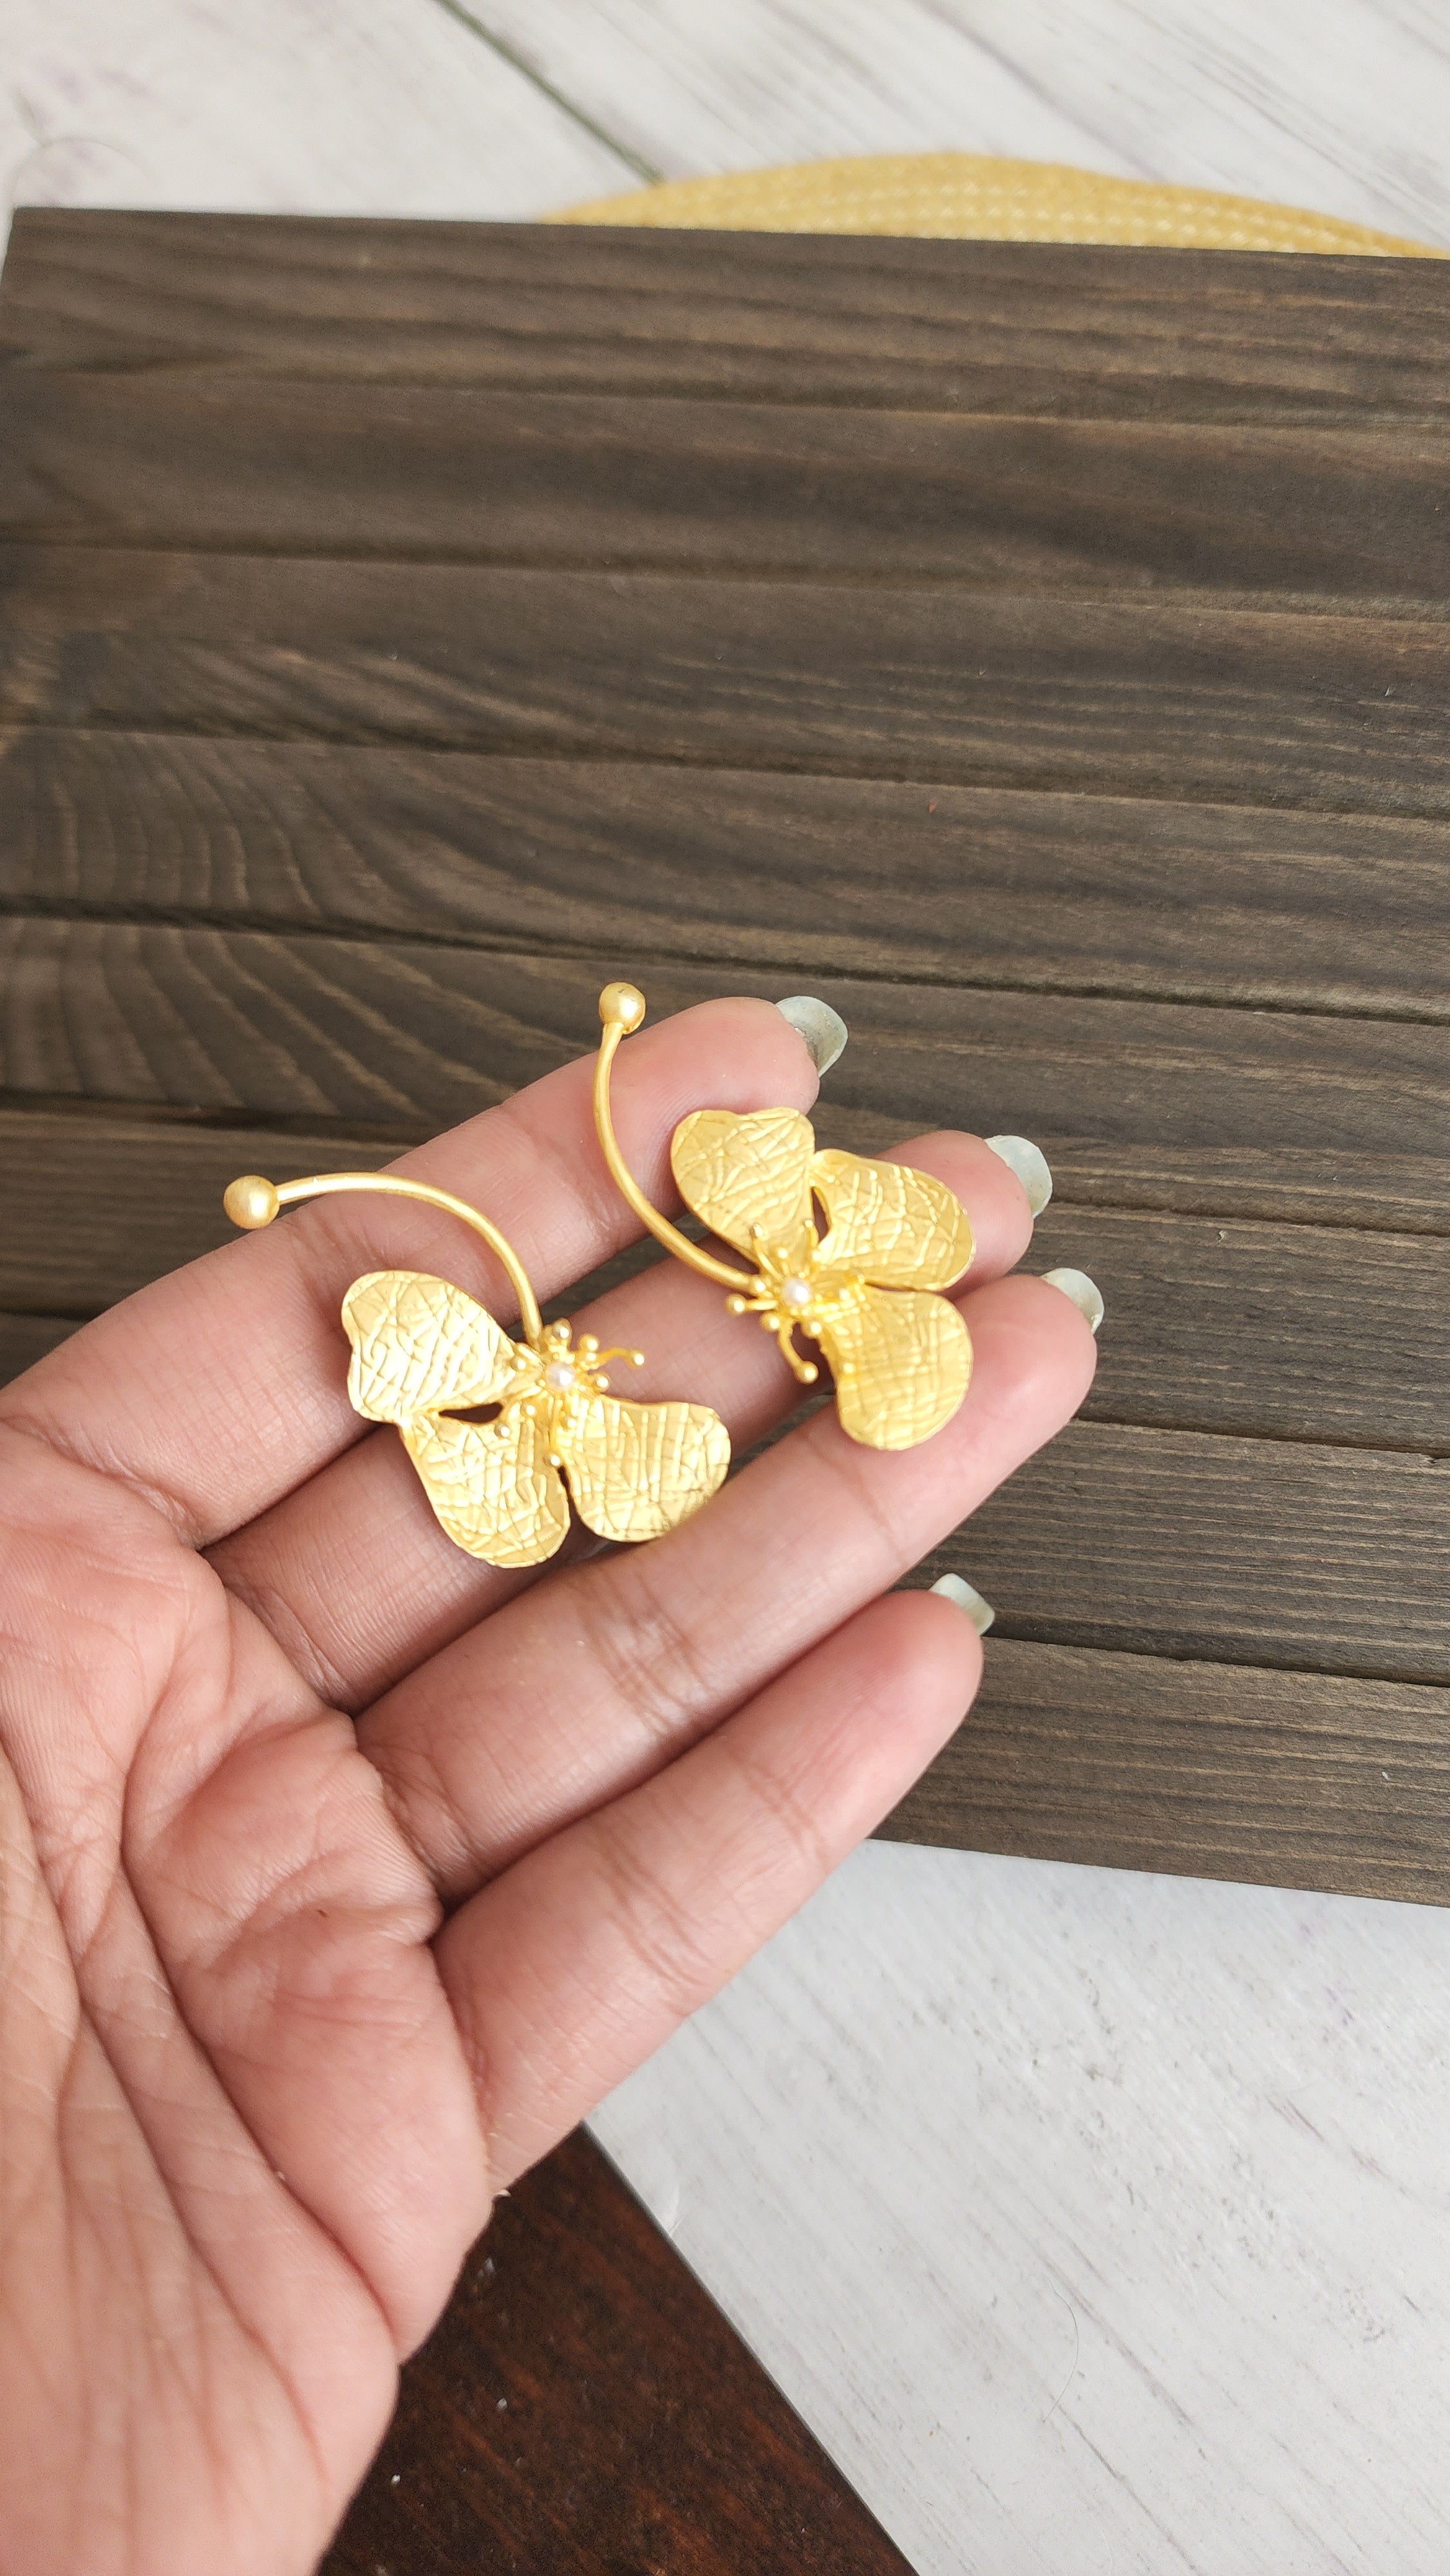 Butterfly contemporary  earrings